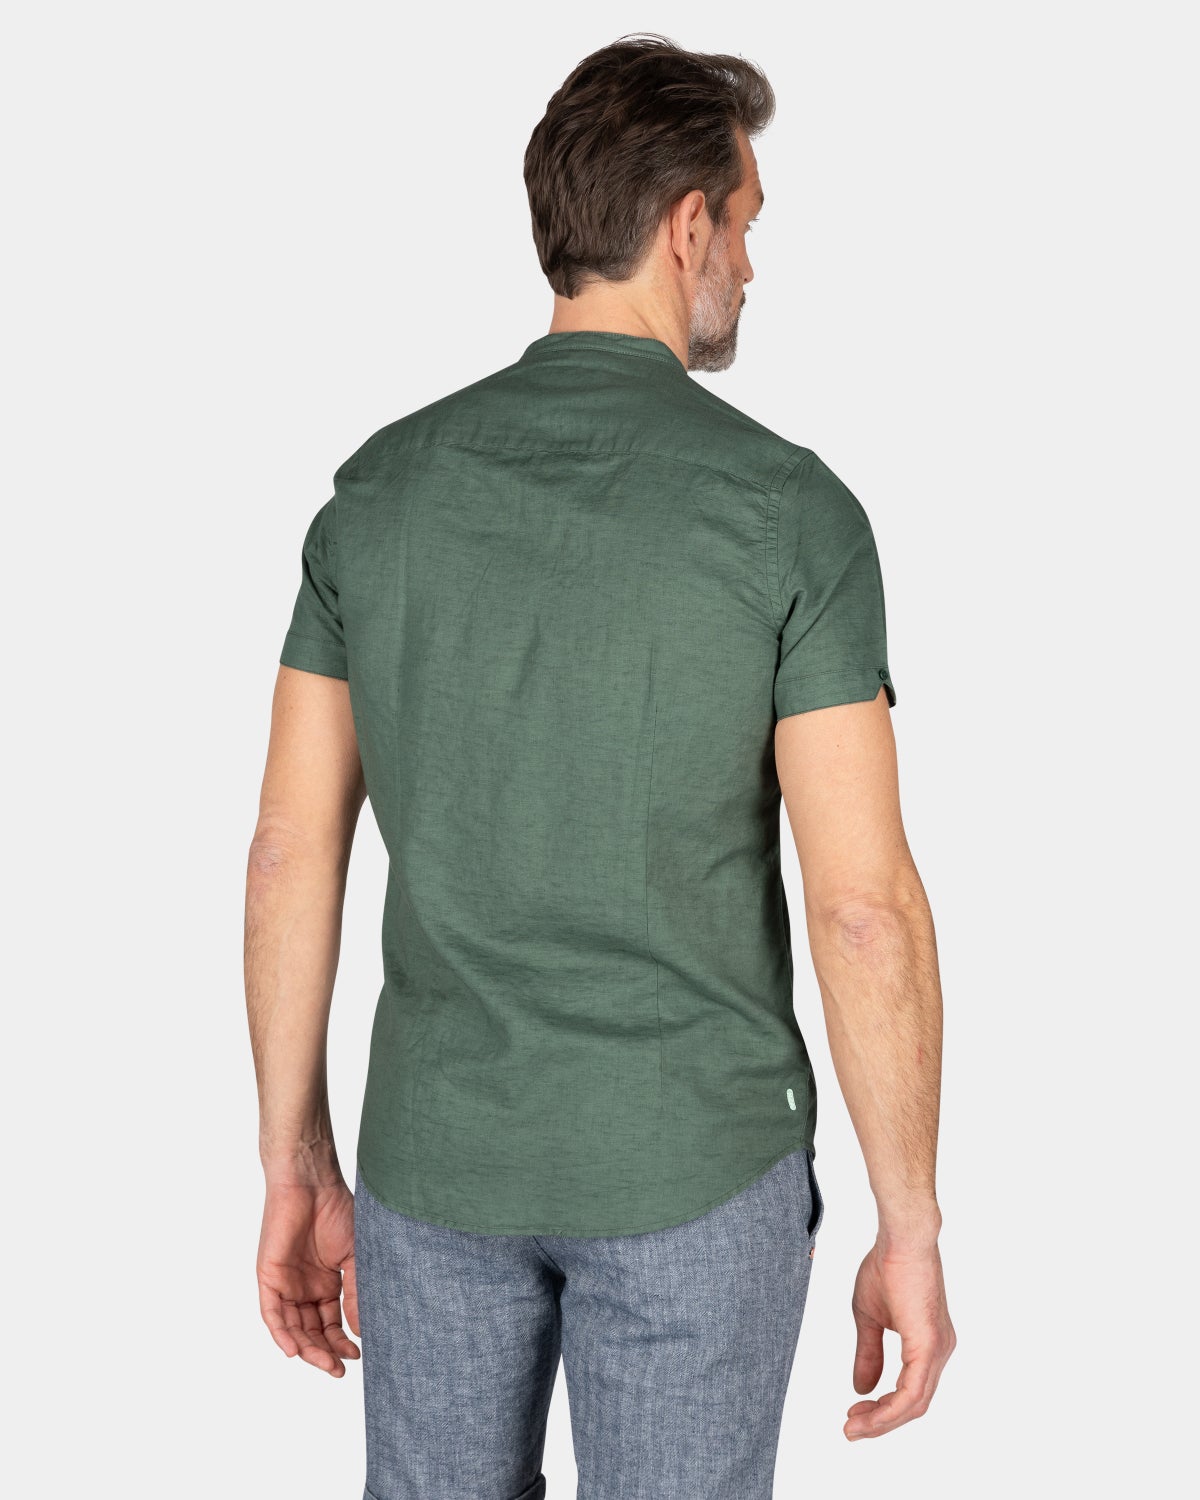 Plain shirt short sleeves - Chalk Green